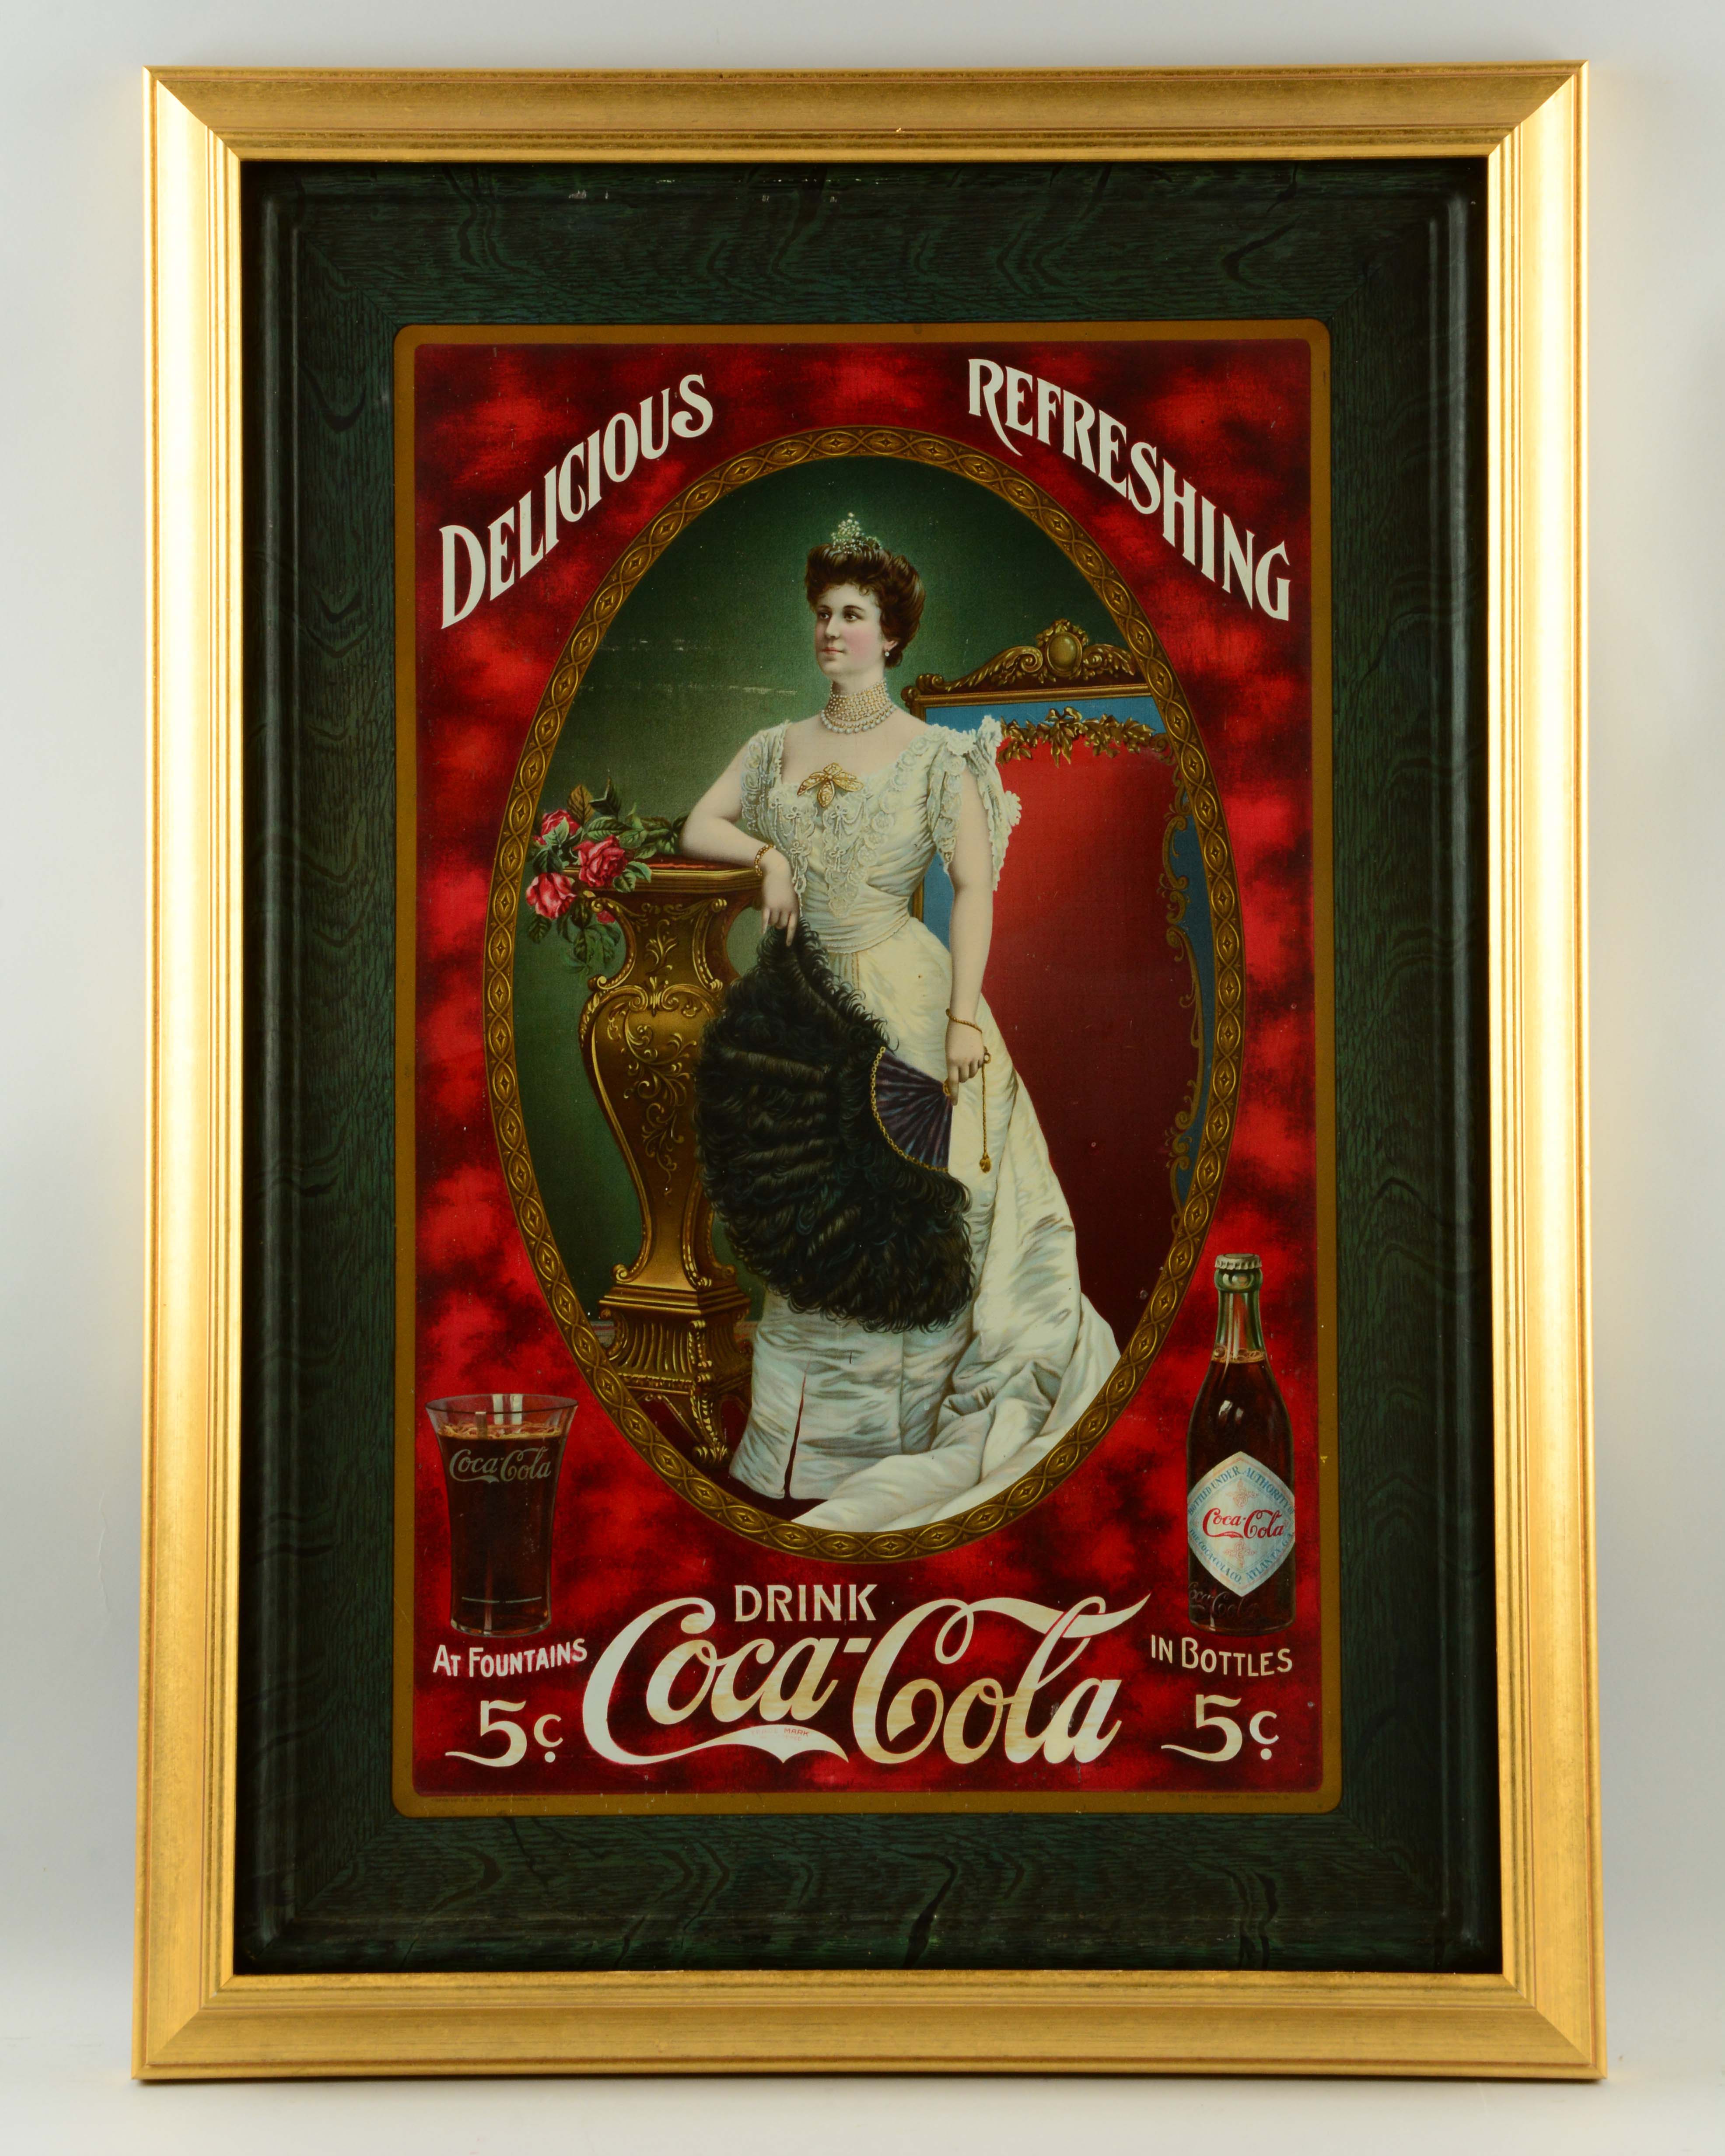 1905 Coca-Cola Tin Sign, estimated at $7,500-15,000.